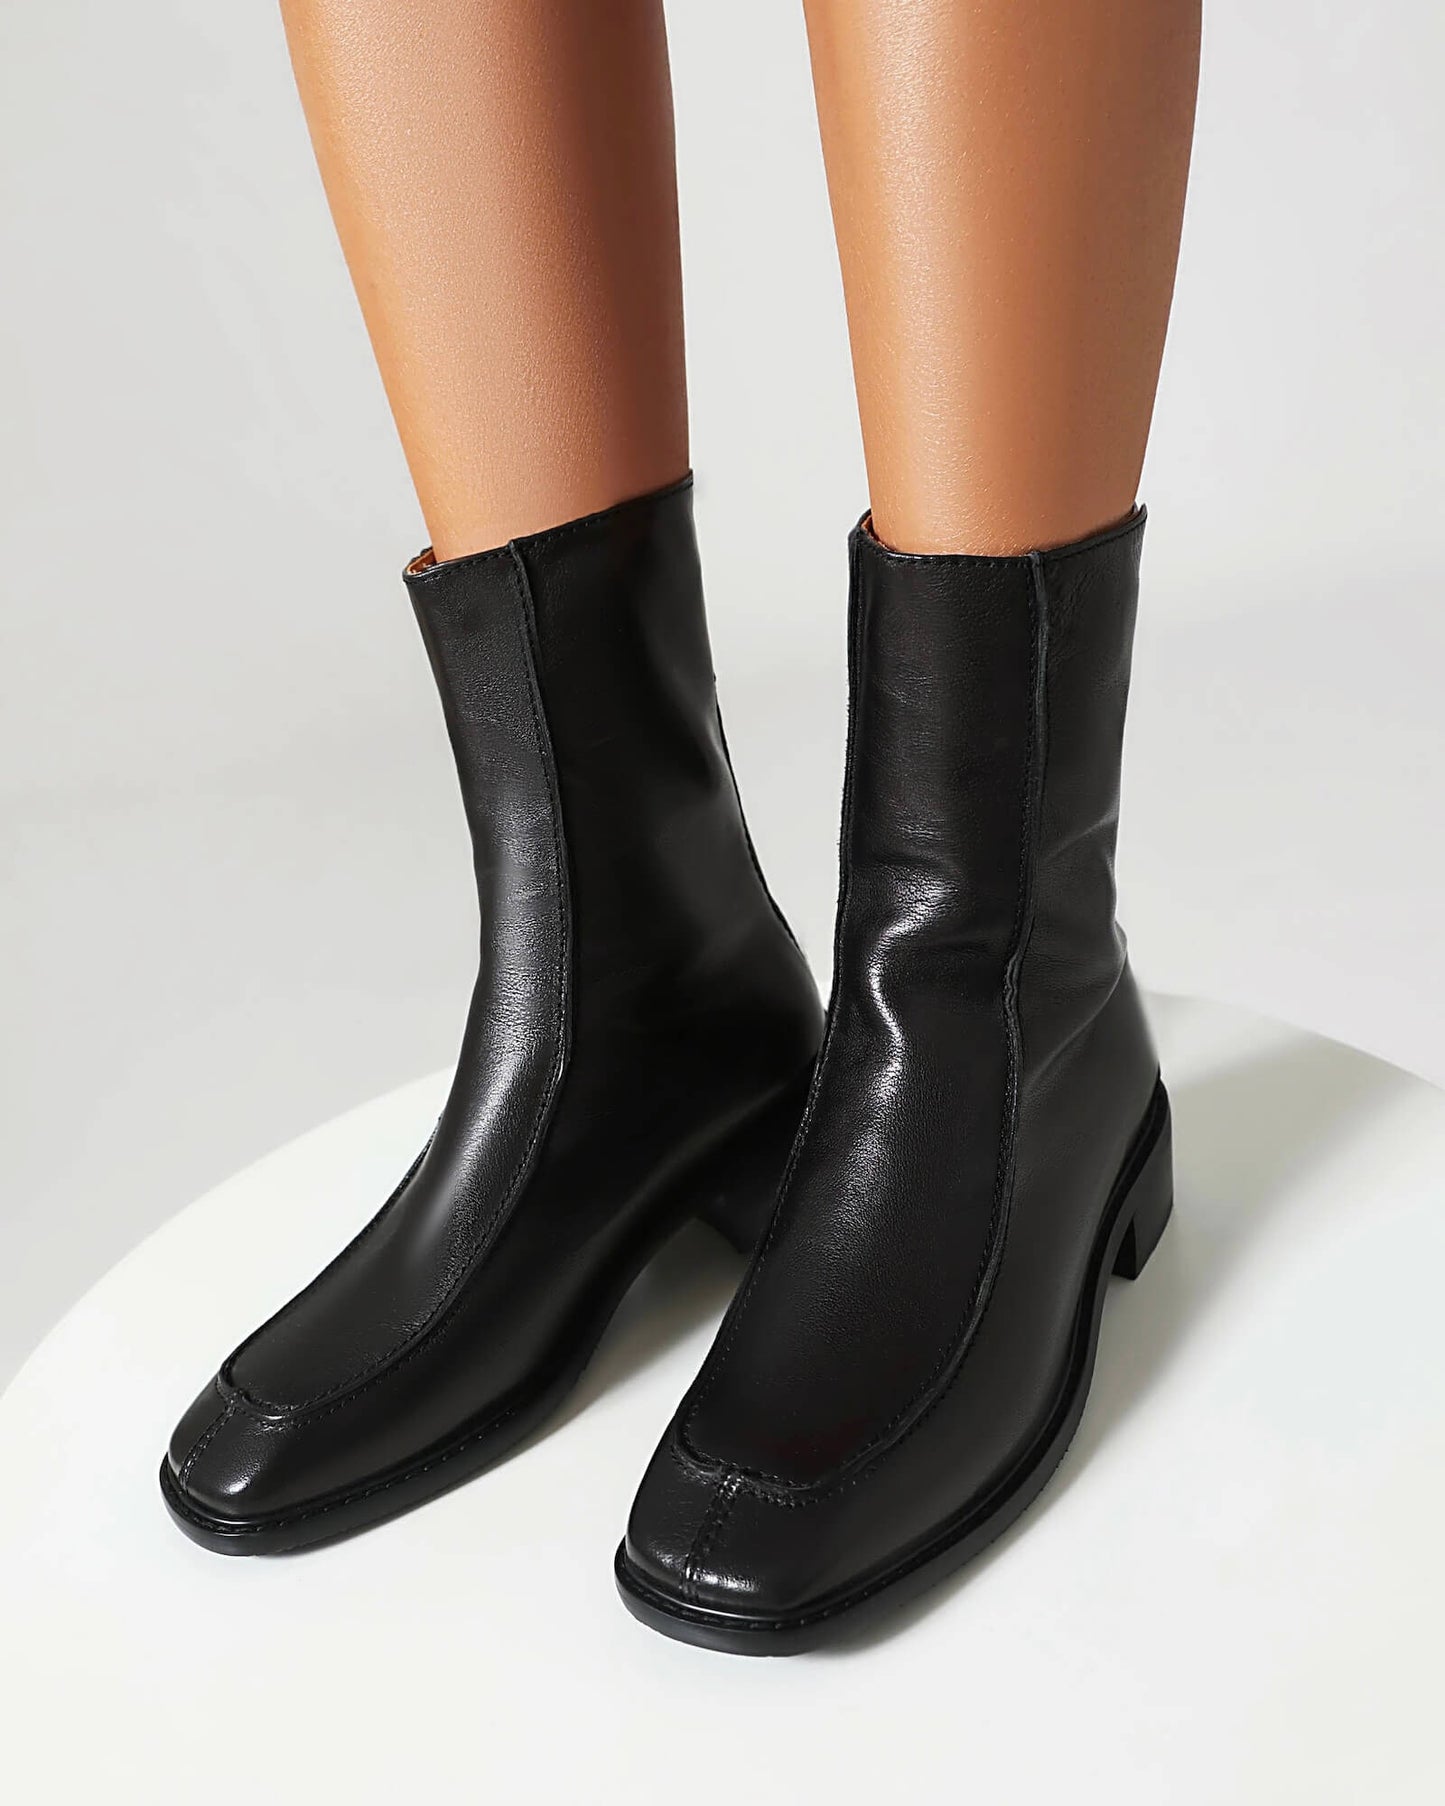 302-square-toe-mid-calf-leather-boots-black-model-5